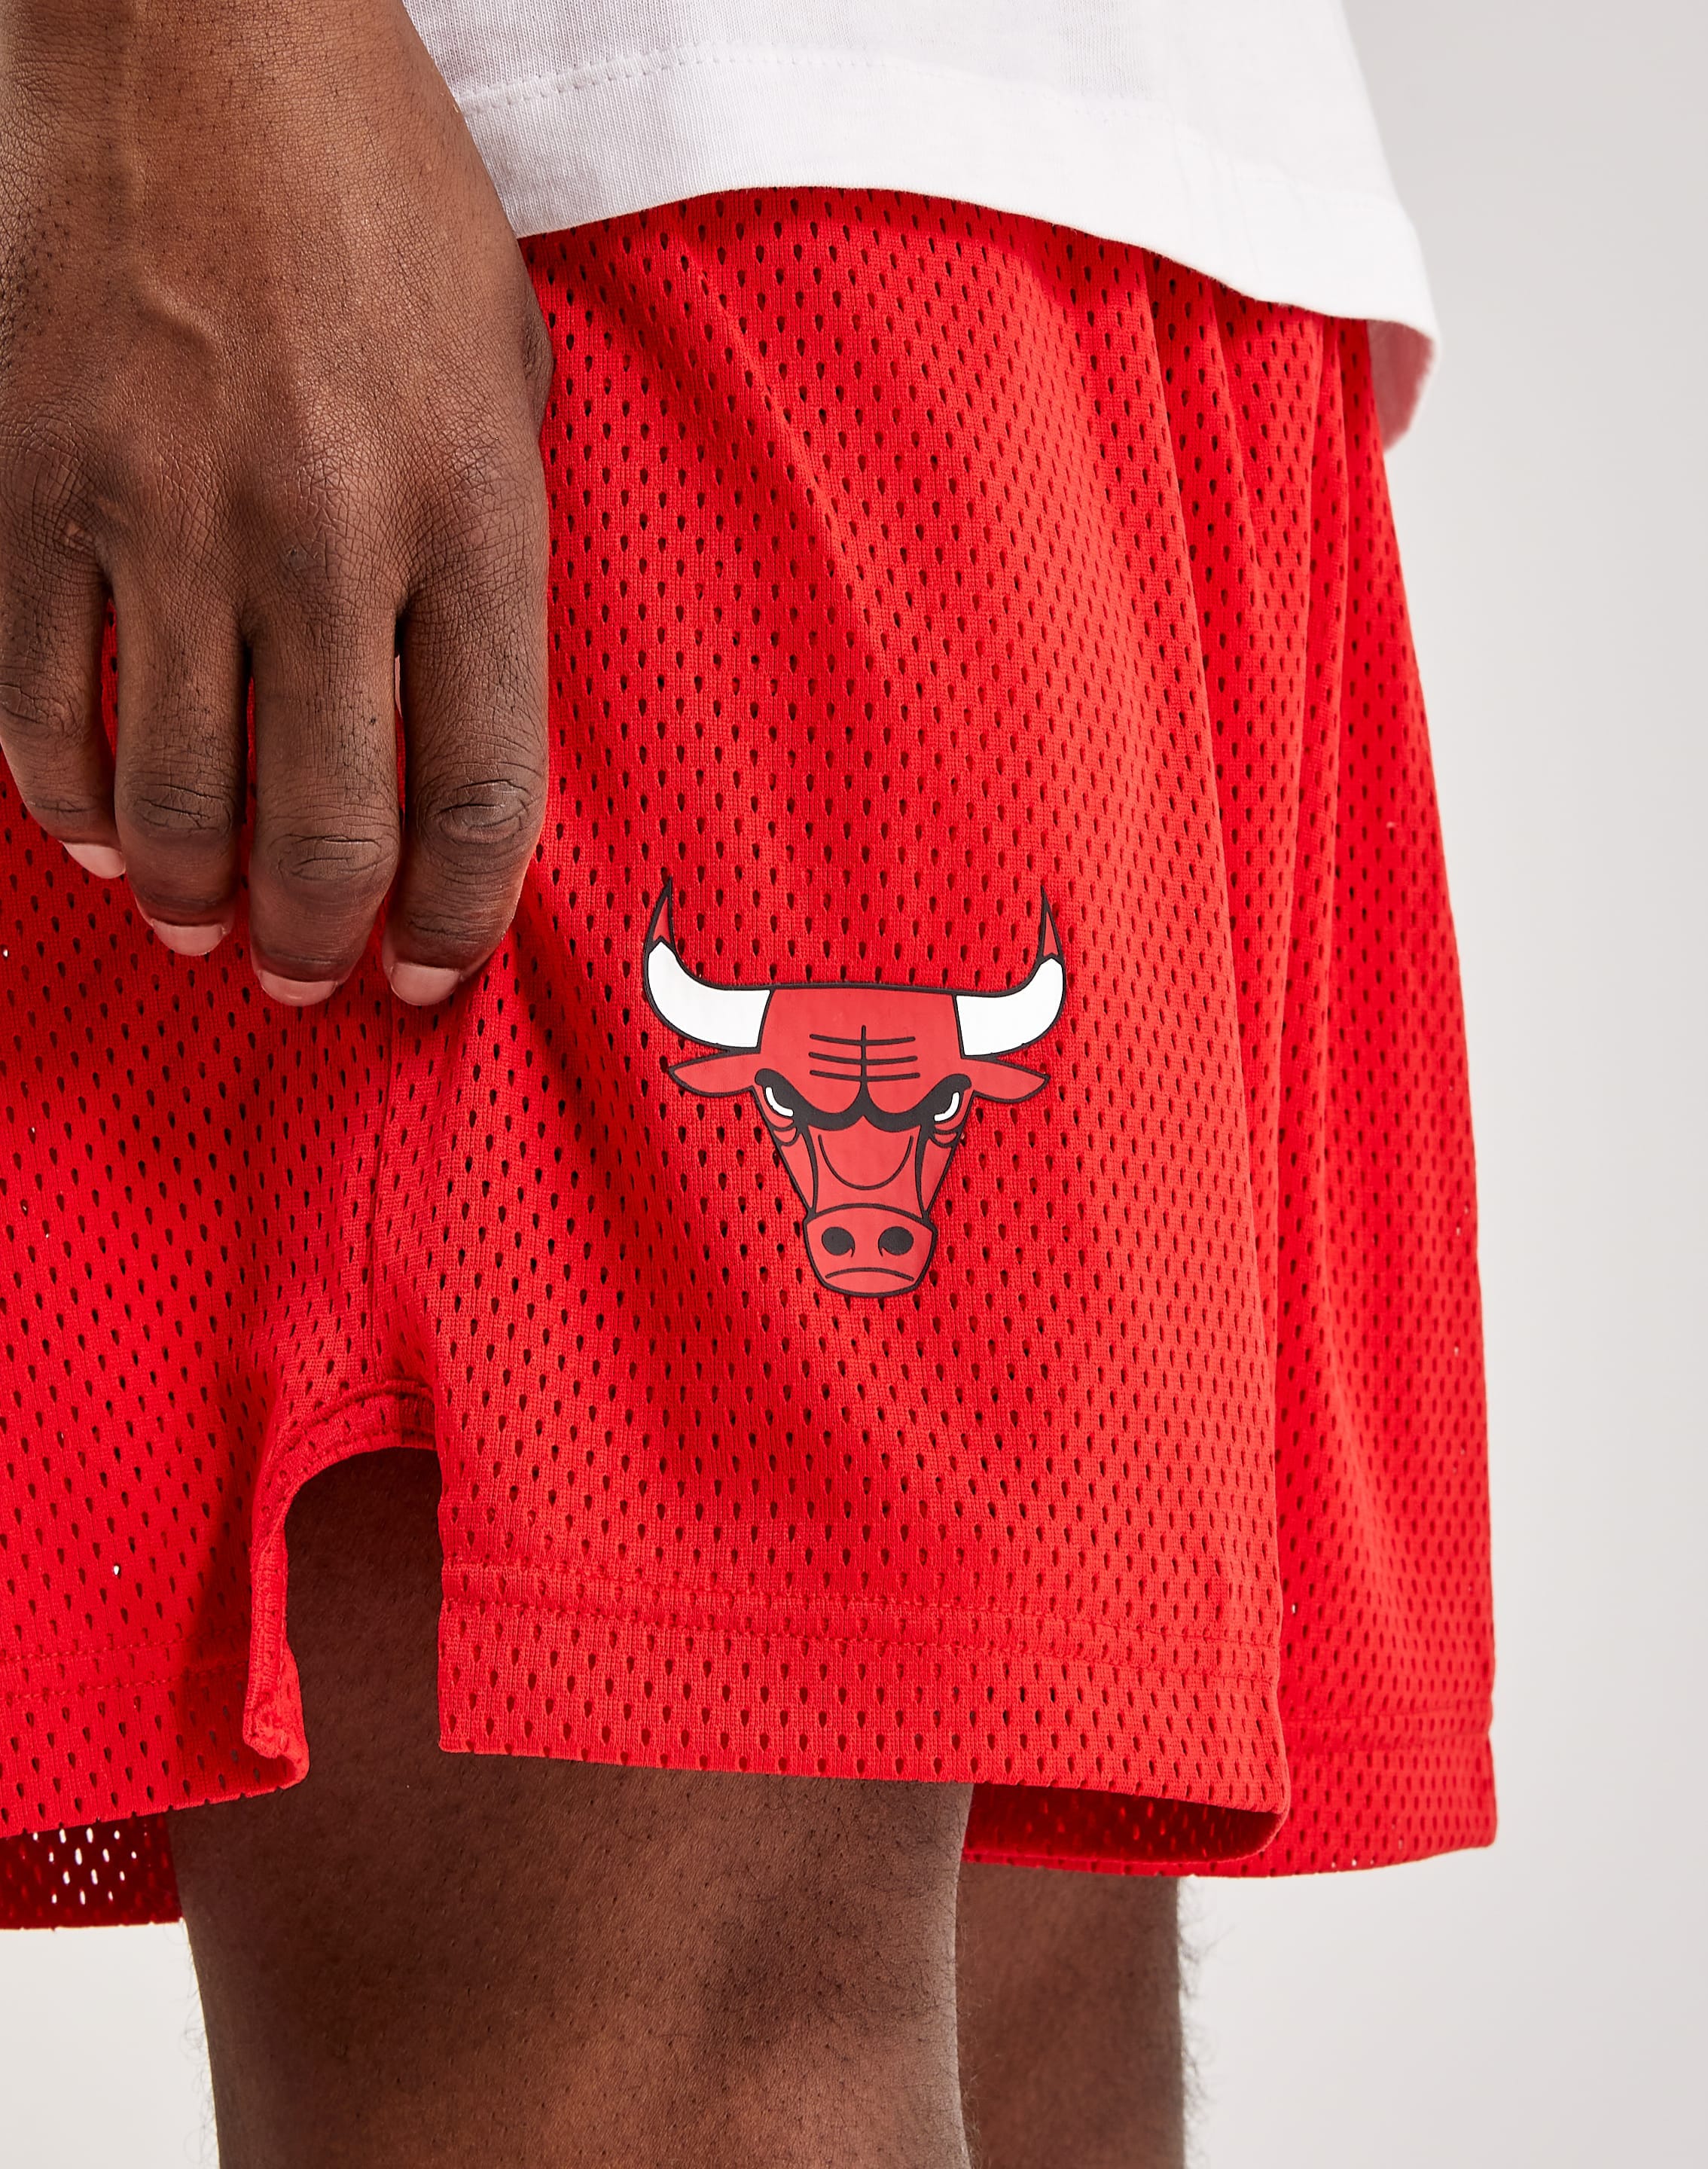 nike bulls basketball shorts